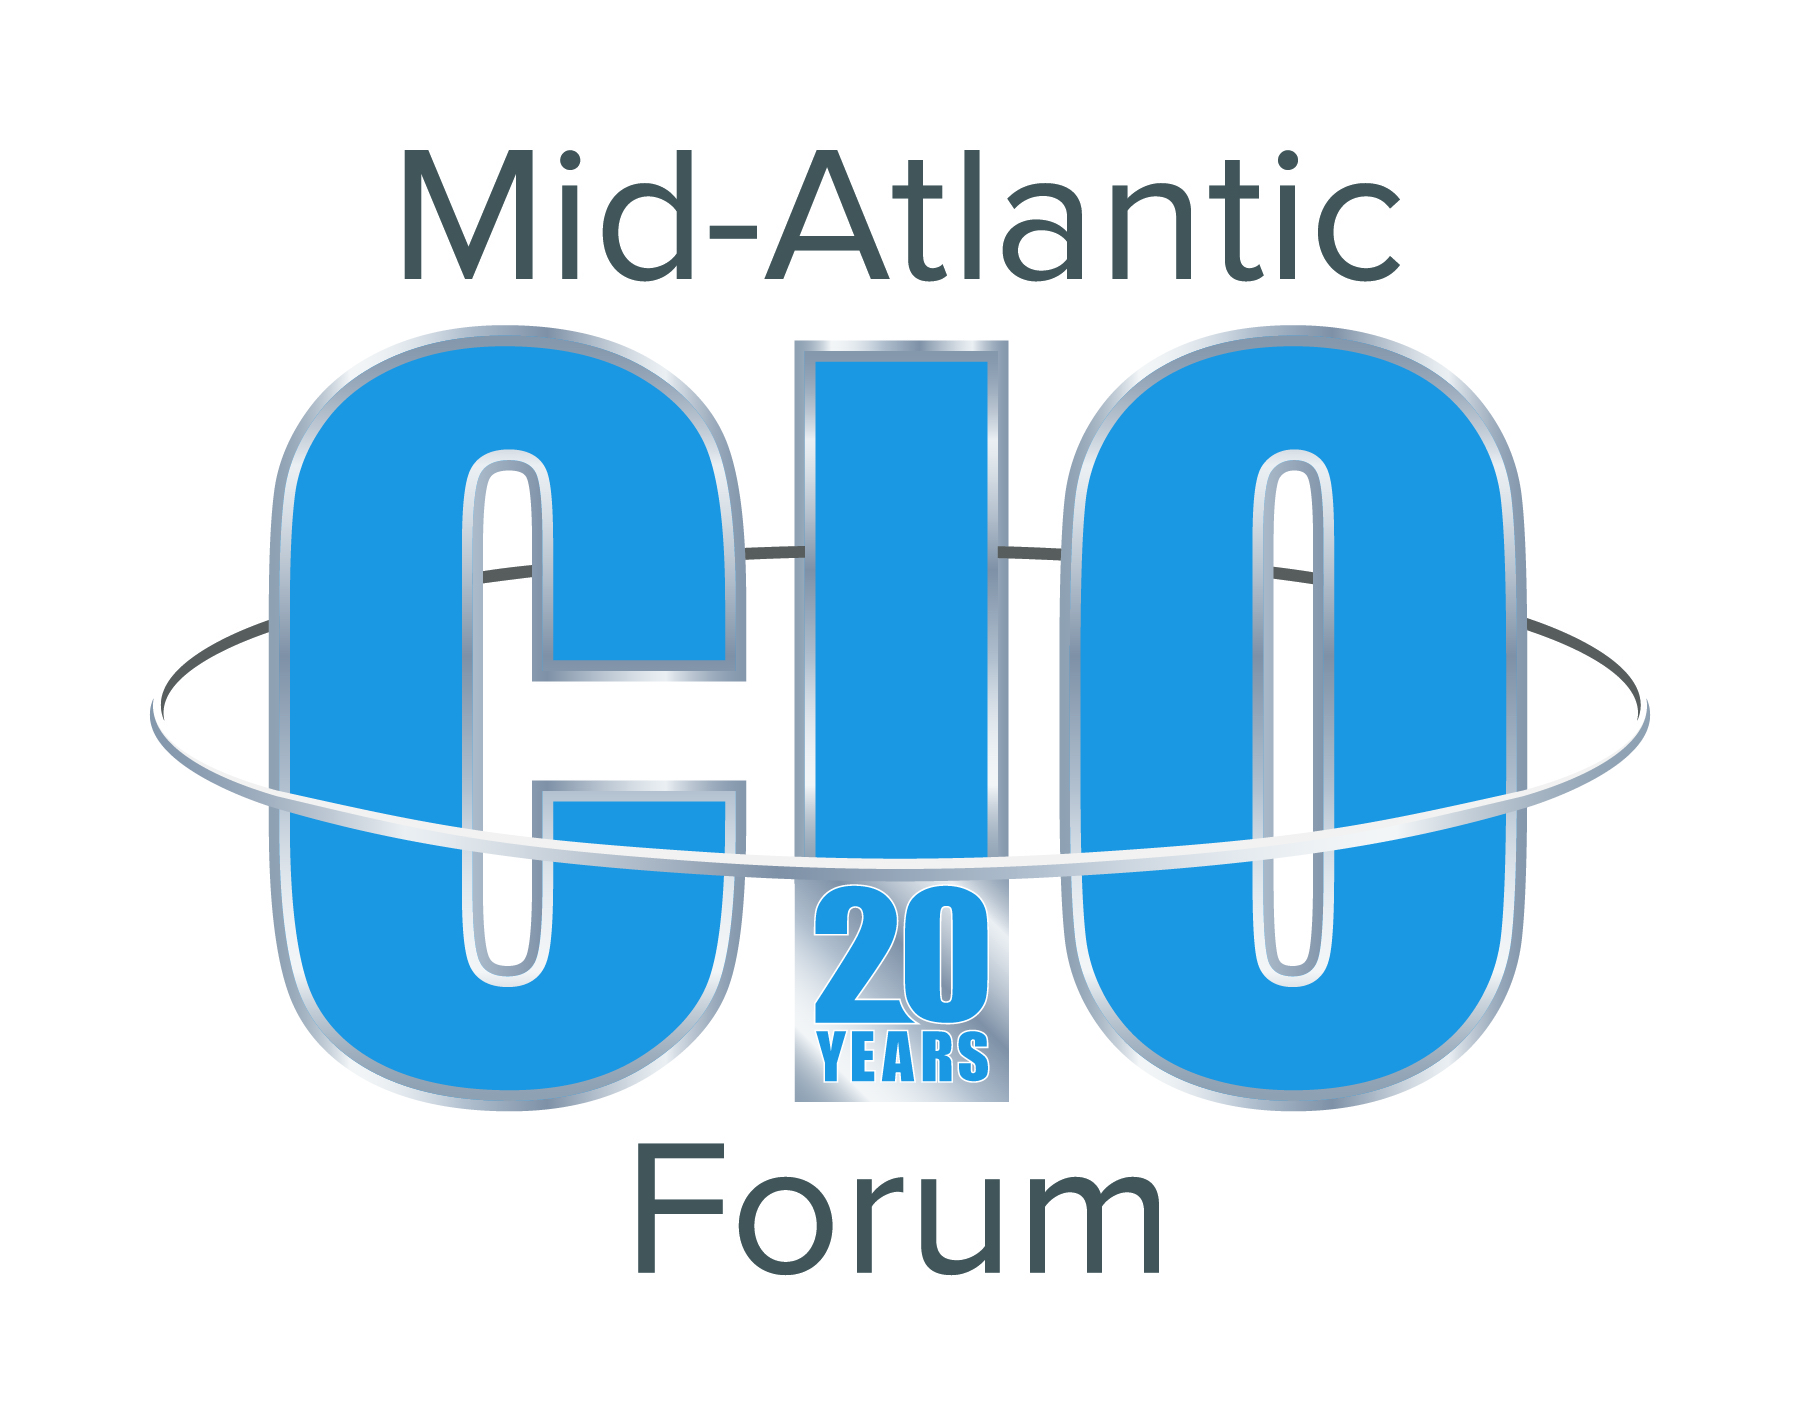 Mid-Atlantic CIO Forum